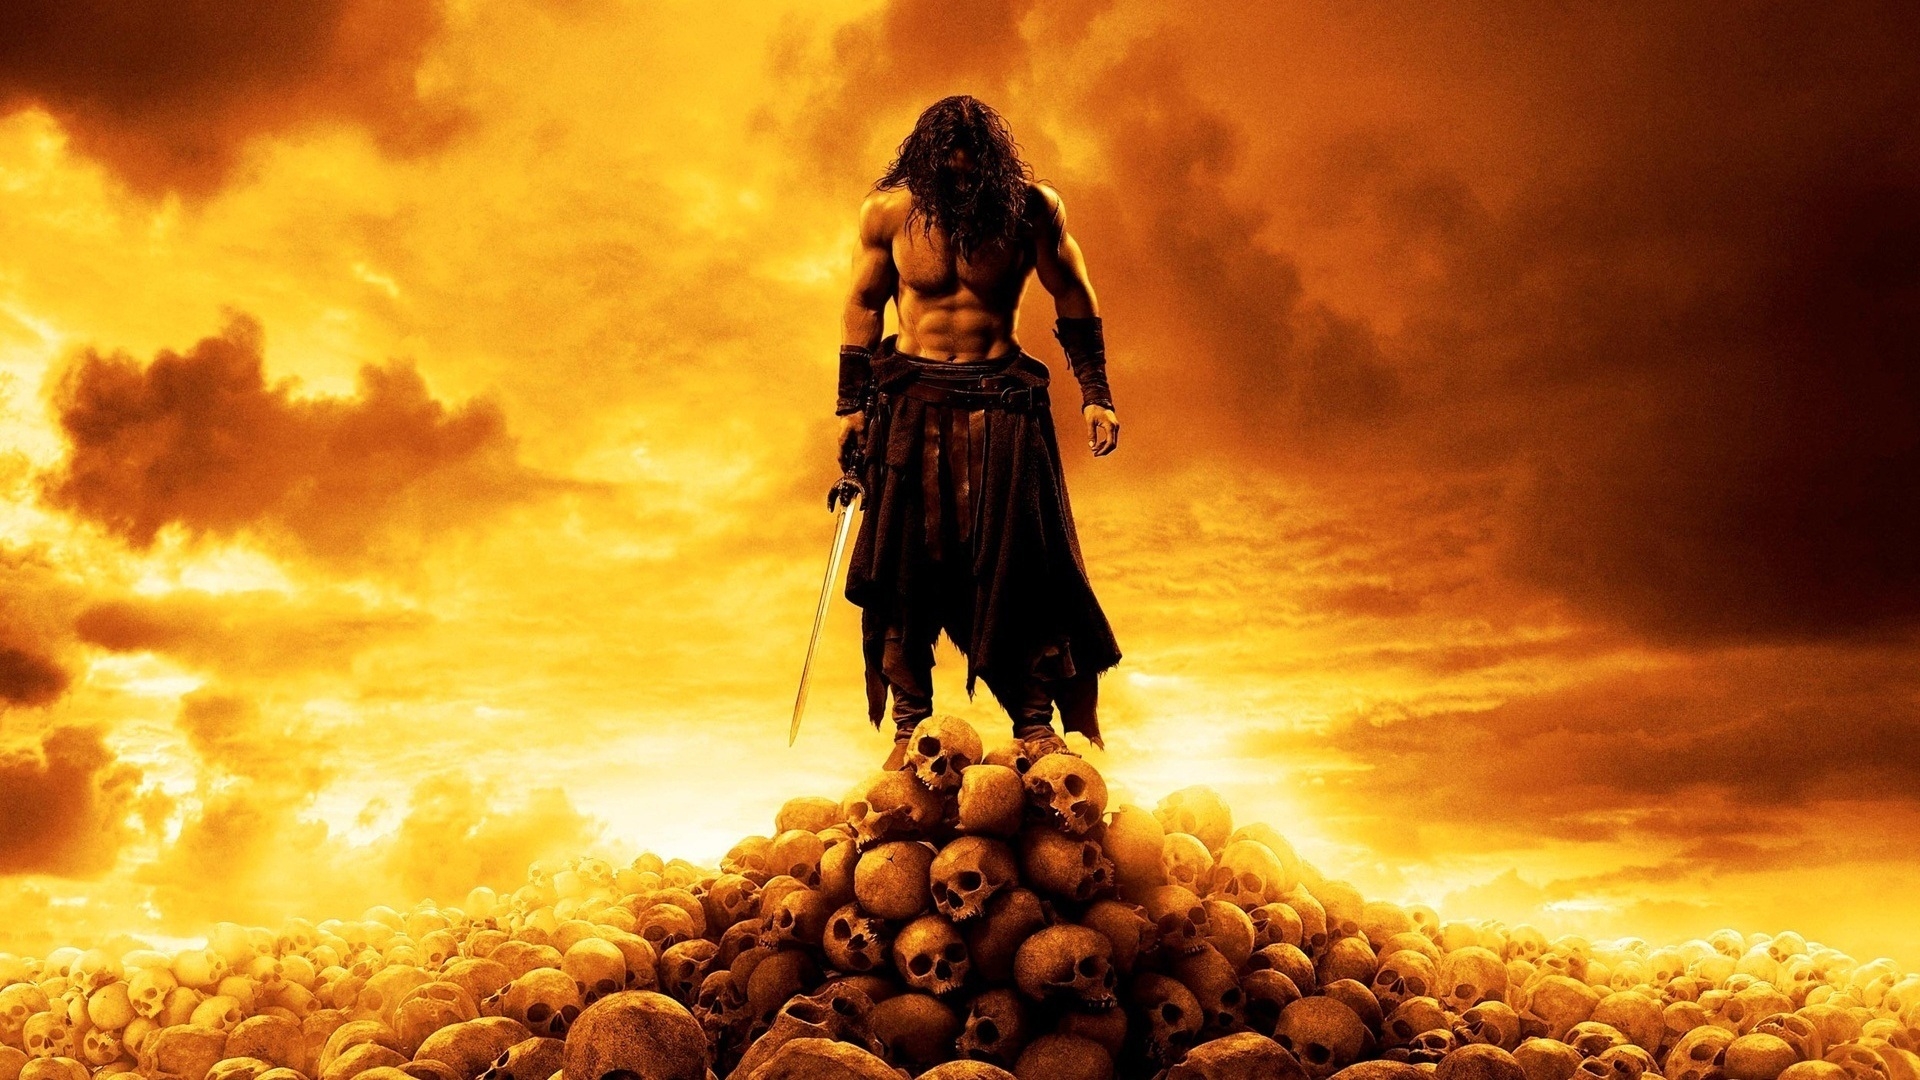 Conan the Barbarian 2011 for 1920 x 1080 HDTV 1080p resolution